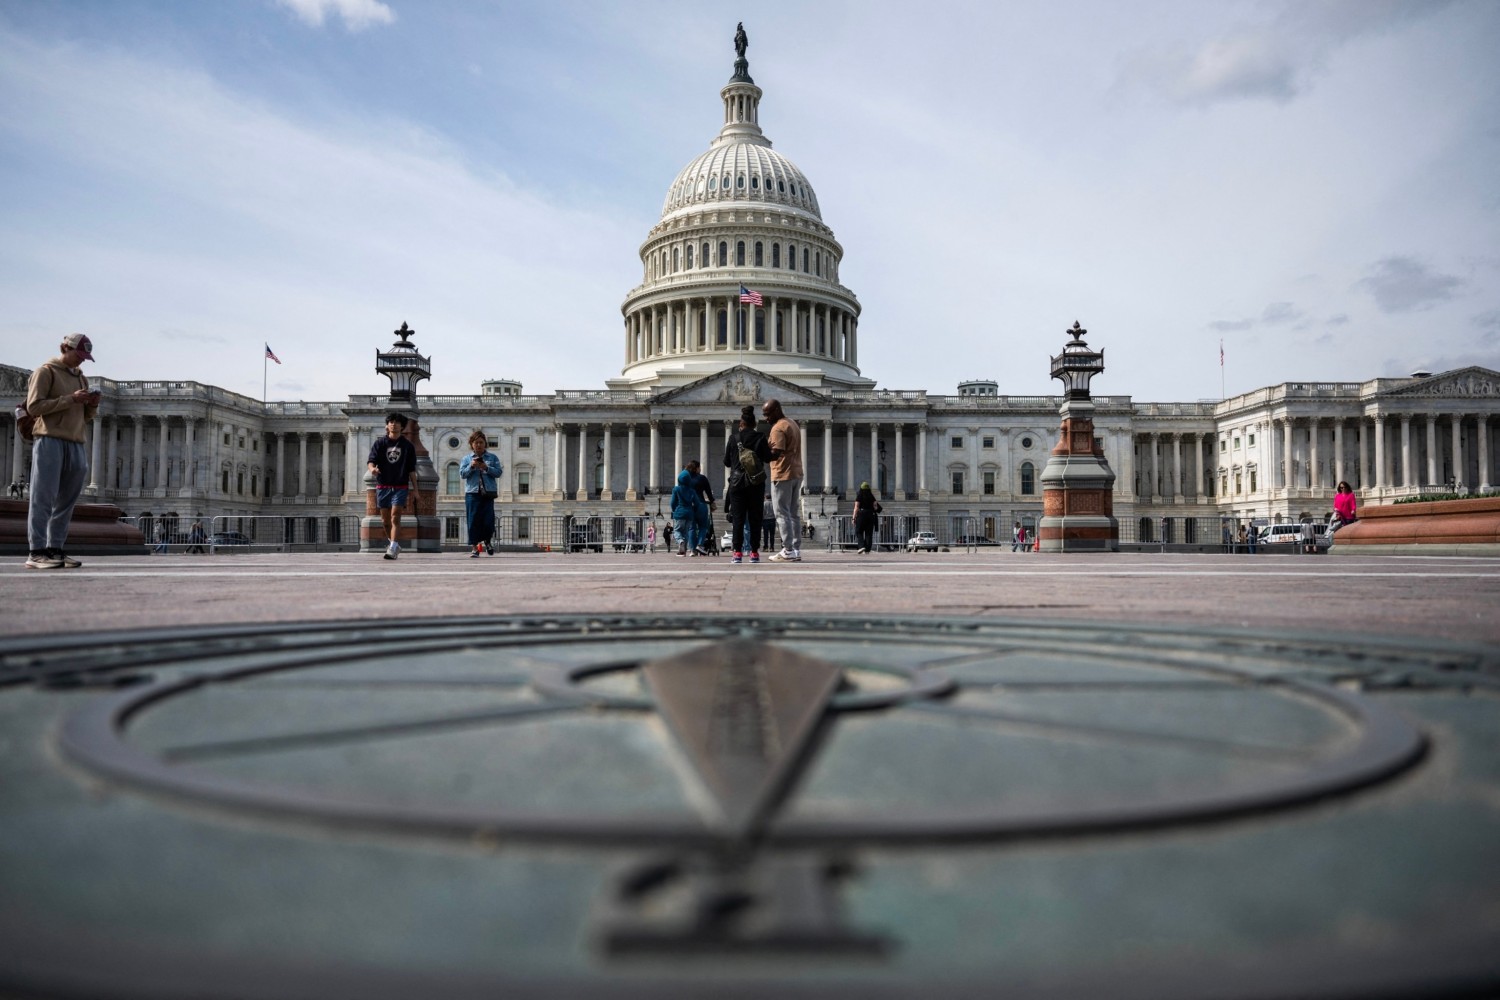 Senate passes 6 funding bills, averting partial government shutdown